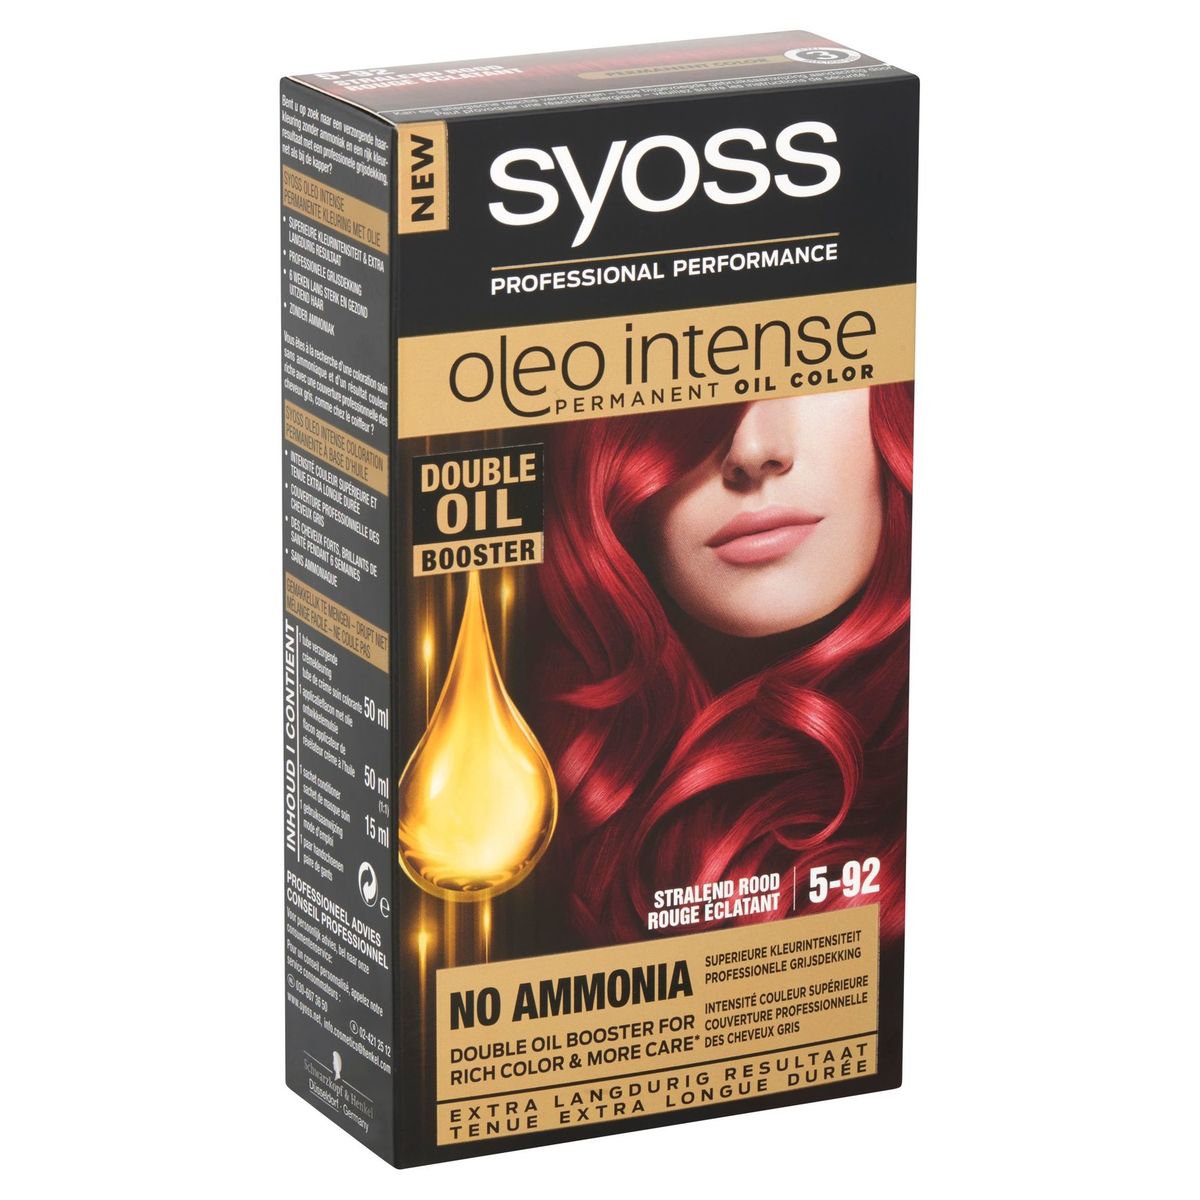 Syoss Oleo Intense Permanent Oil Color 5-92 Rouge Éclatant